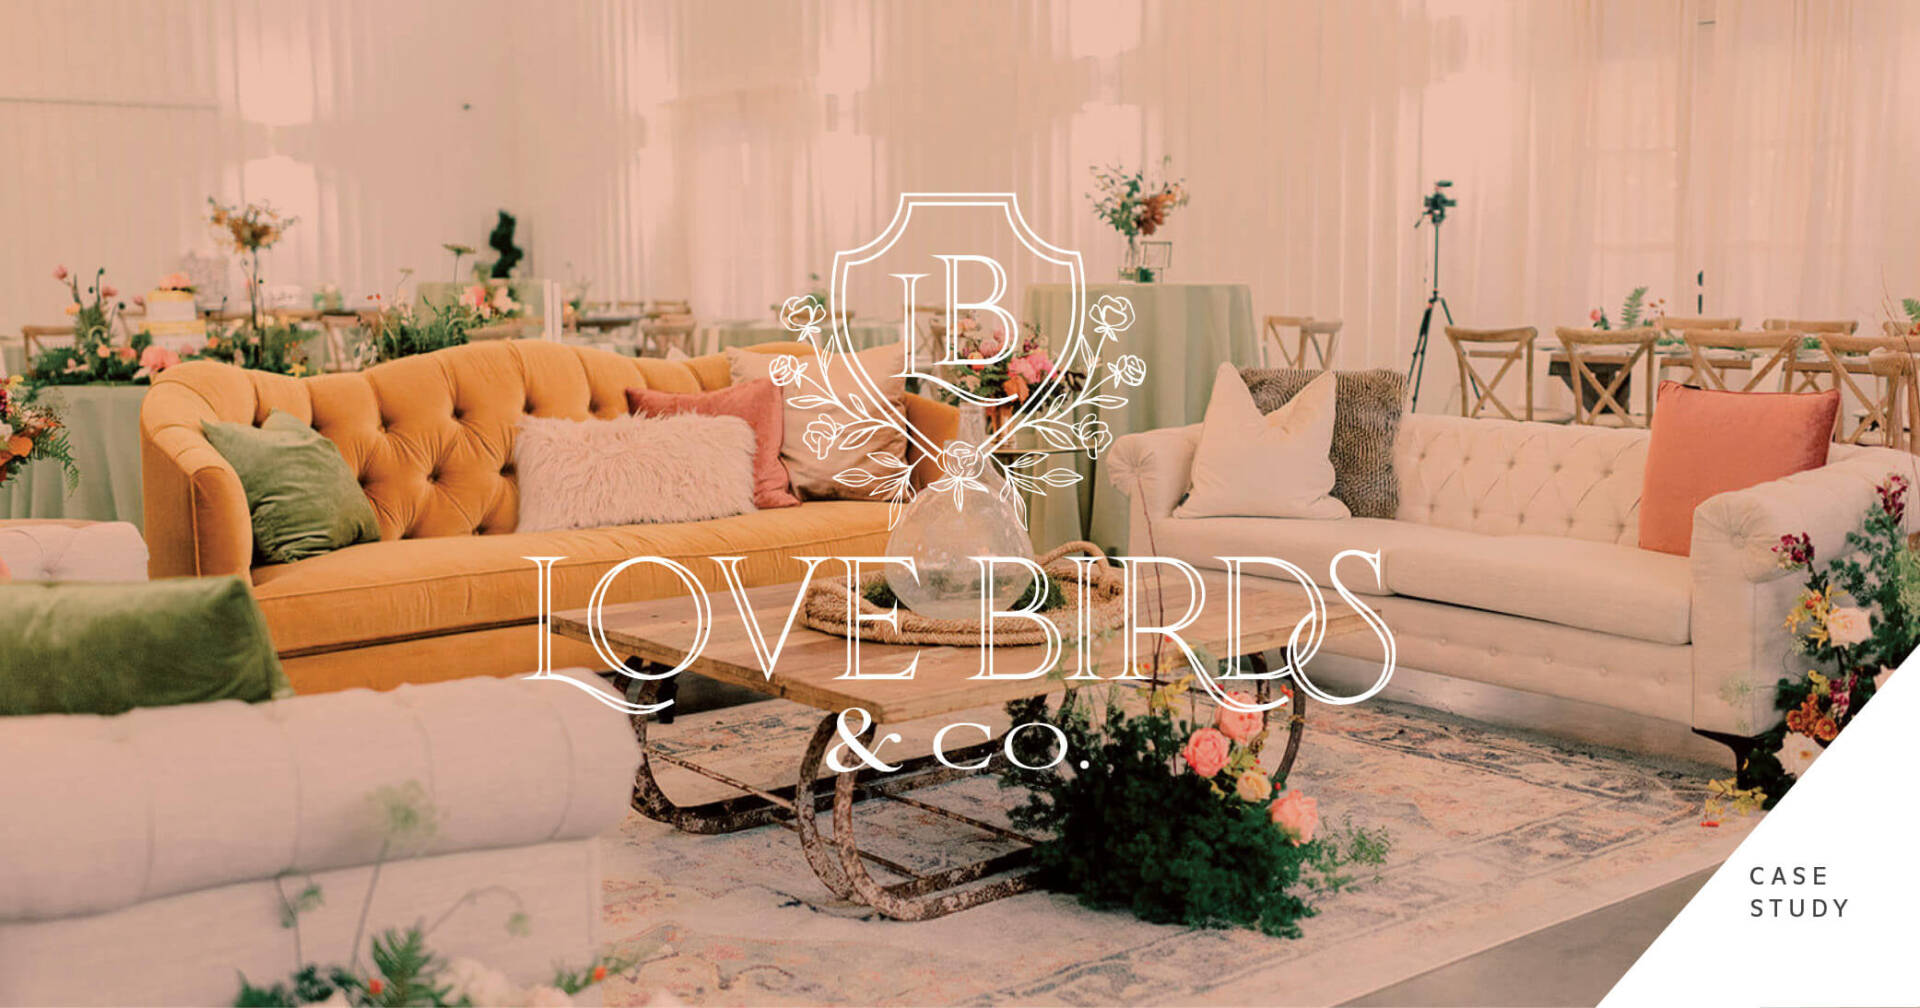 Love Birds & Co.